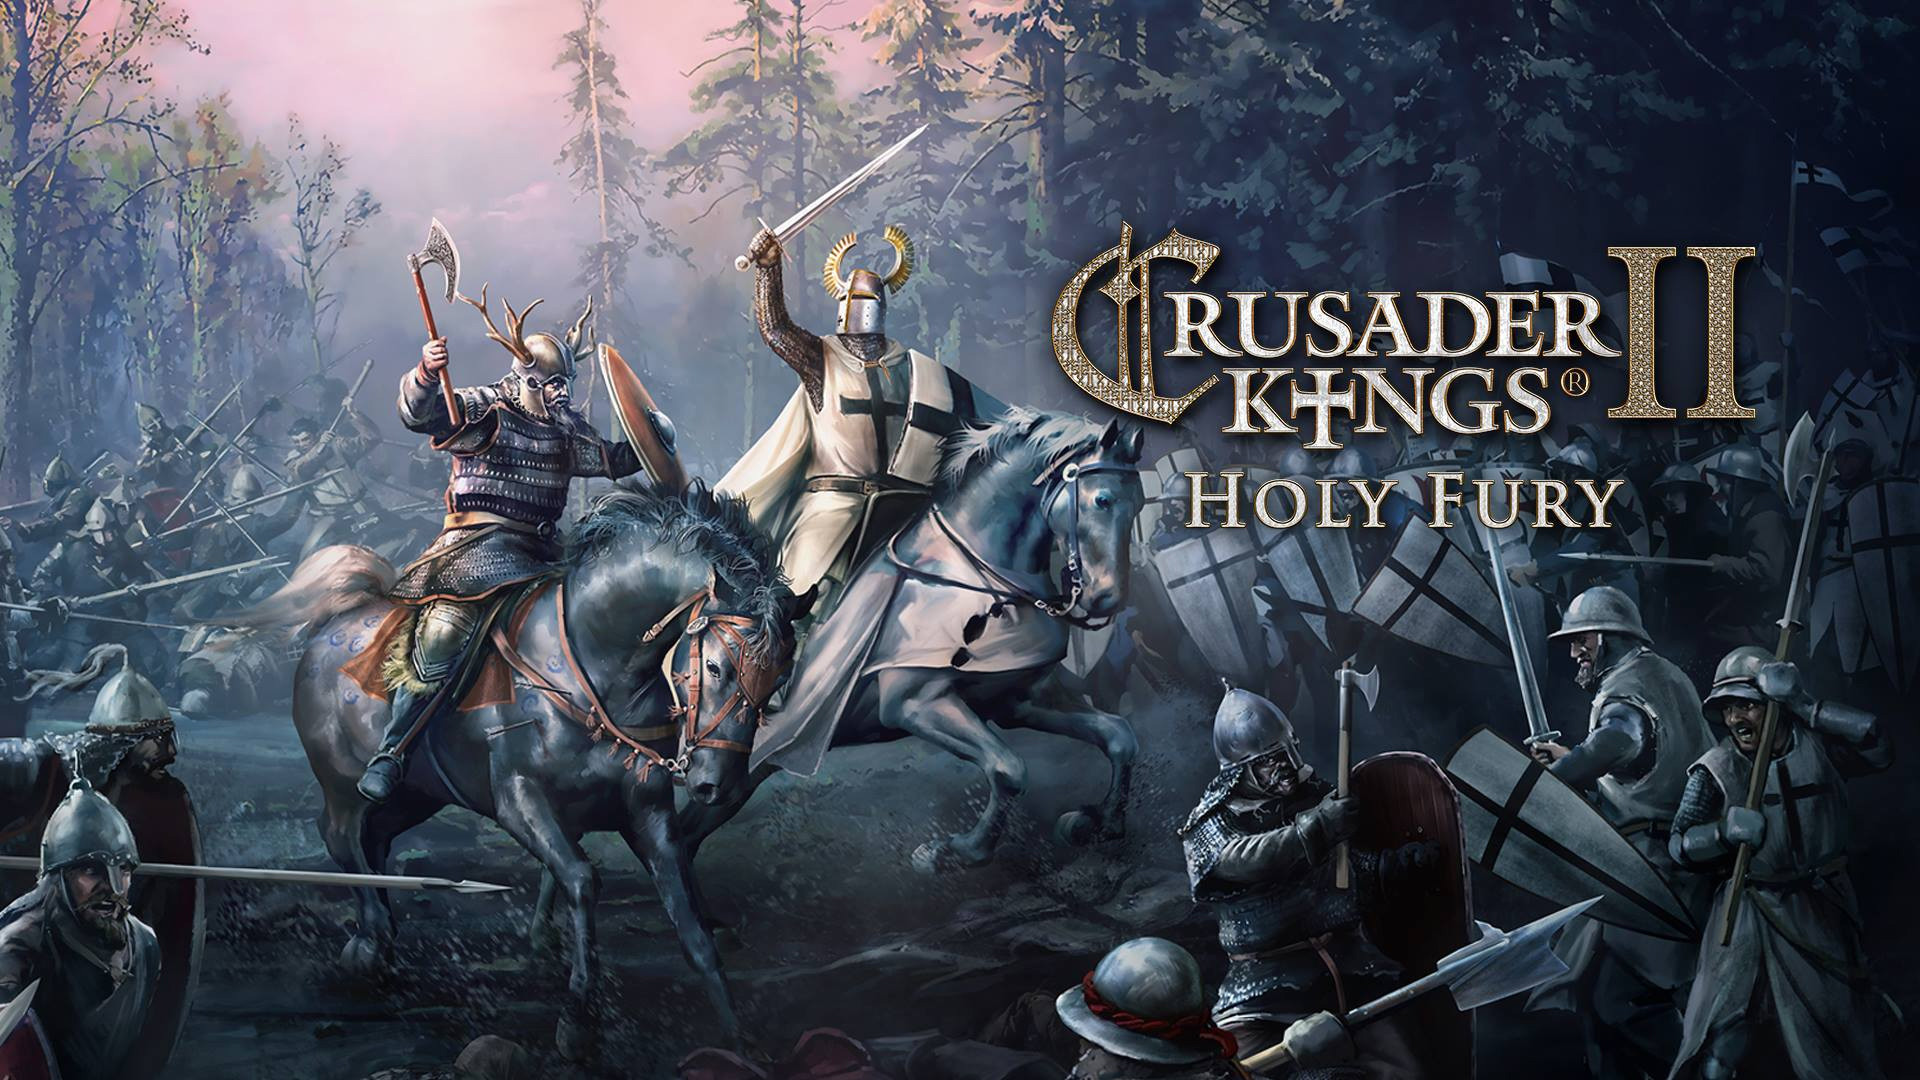 Crusader kings 2 3.3